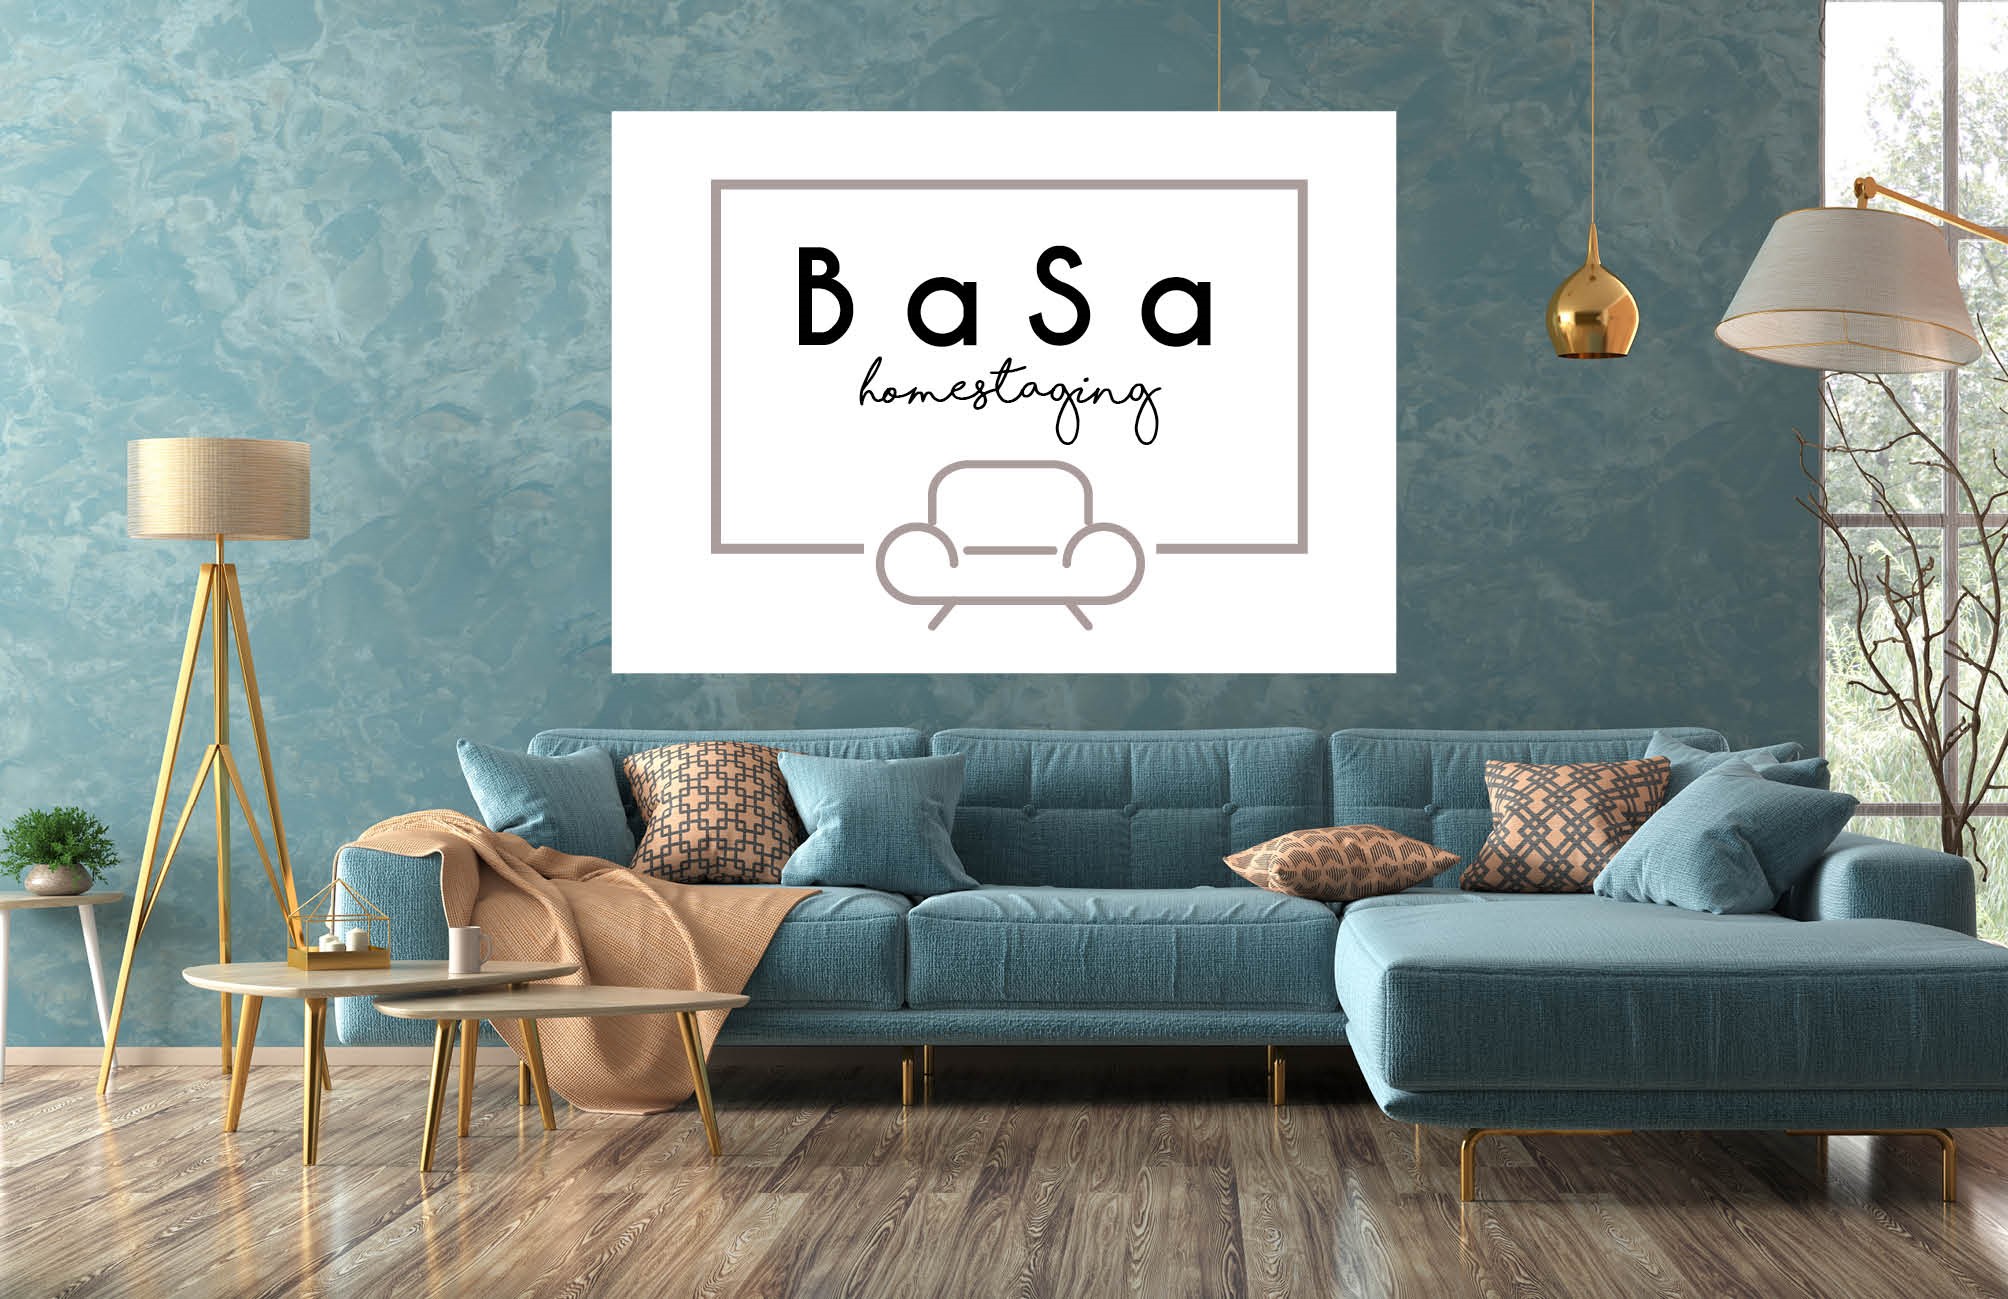 BaSa Homestaging